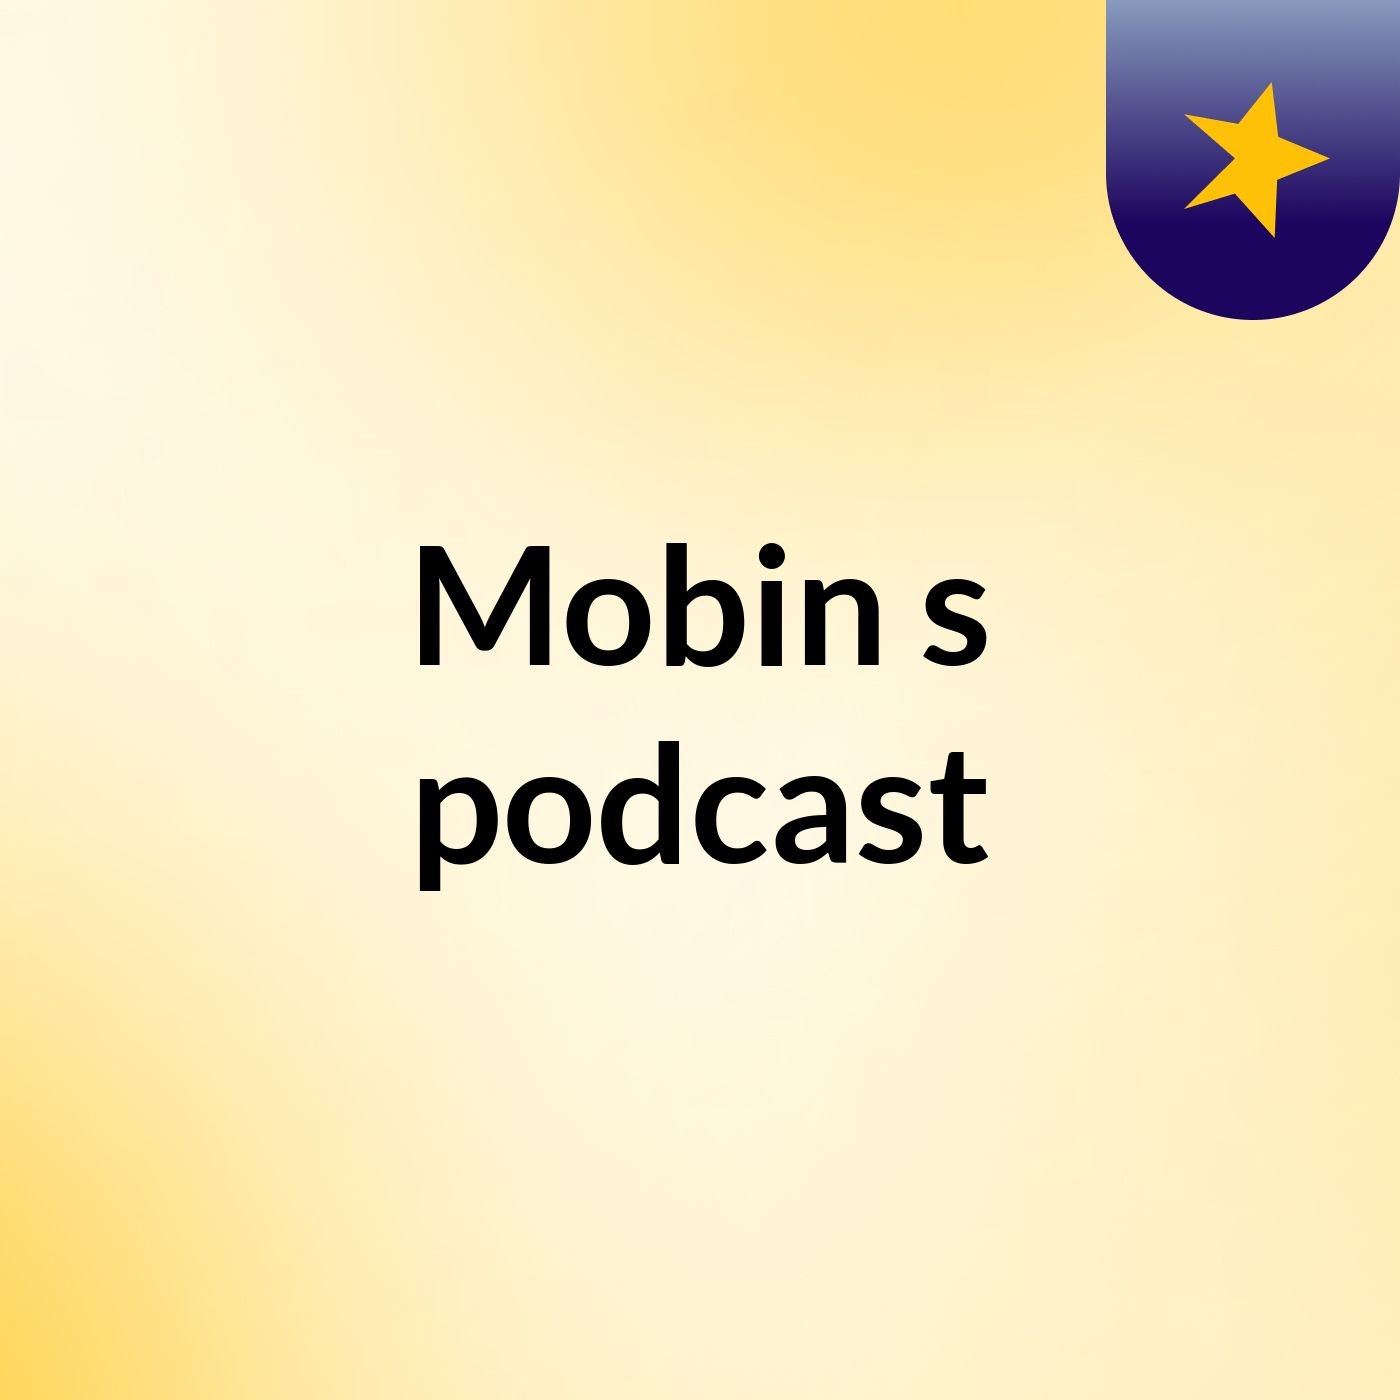 Episode 7 - Mobin's podcast